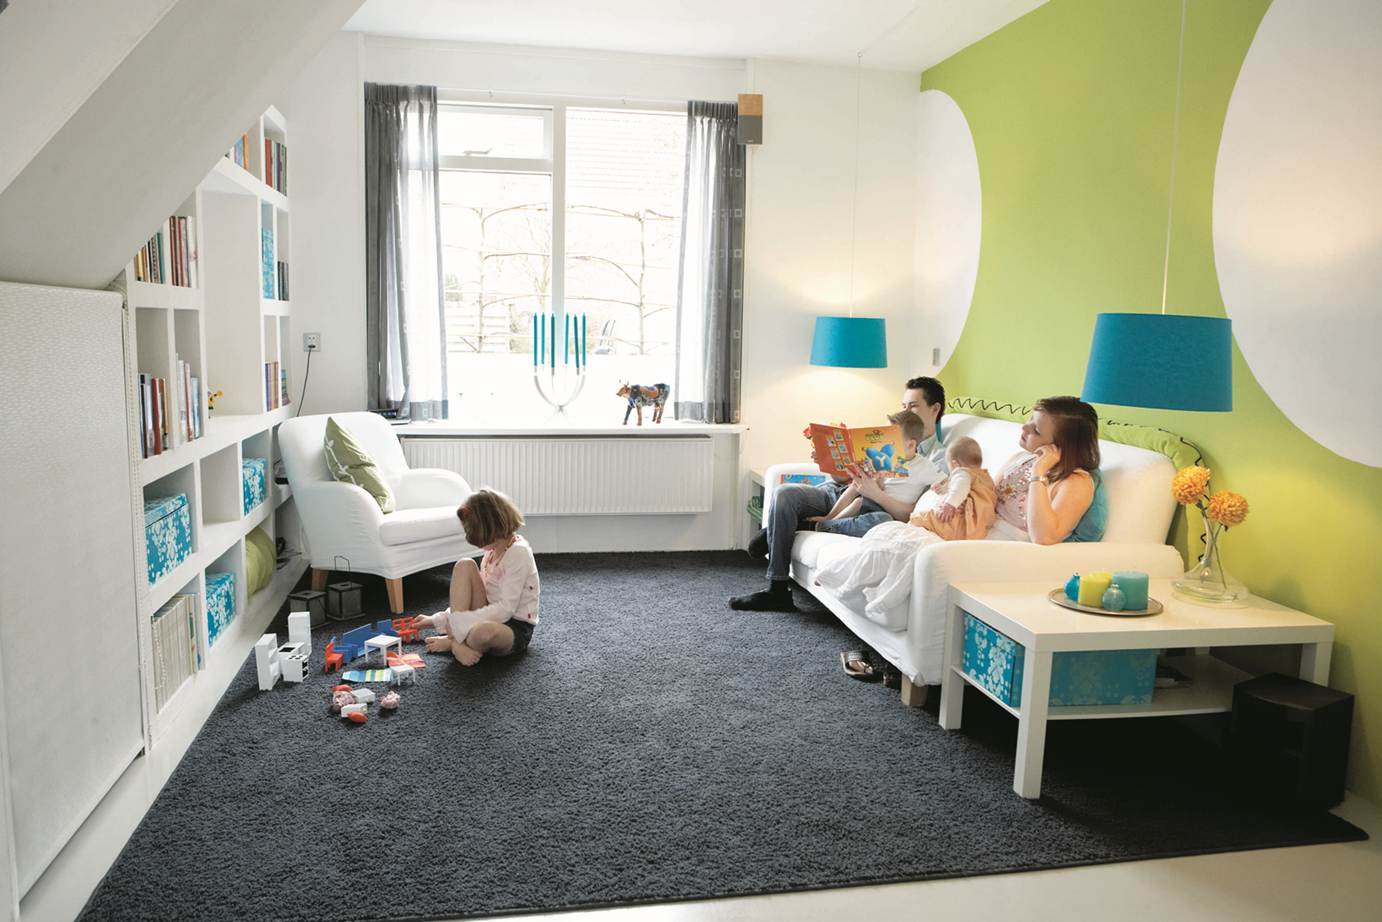 Living Room Kids Playroom Ideas New Dream House Experience